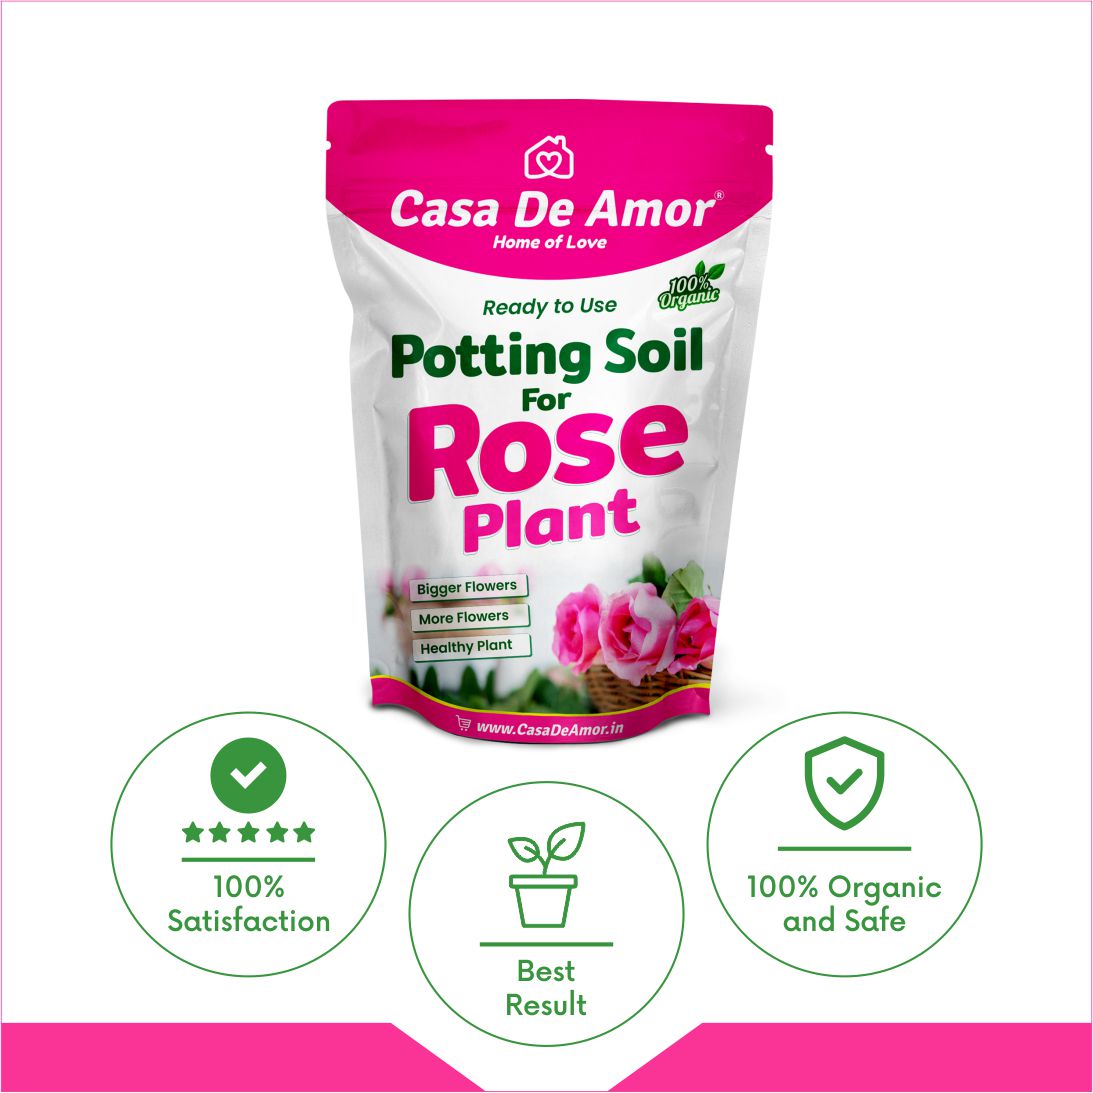 100% organic and safe potting soil for rose plants 